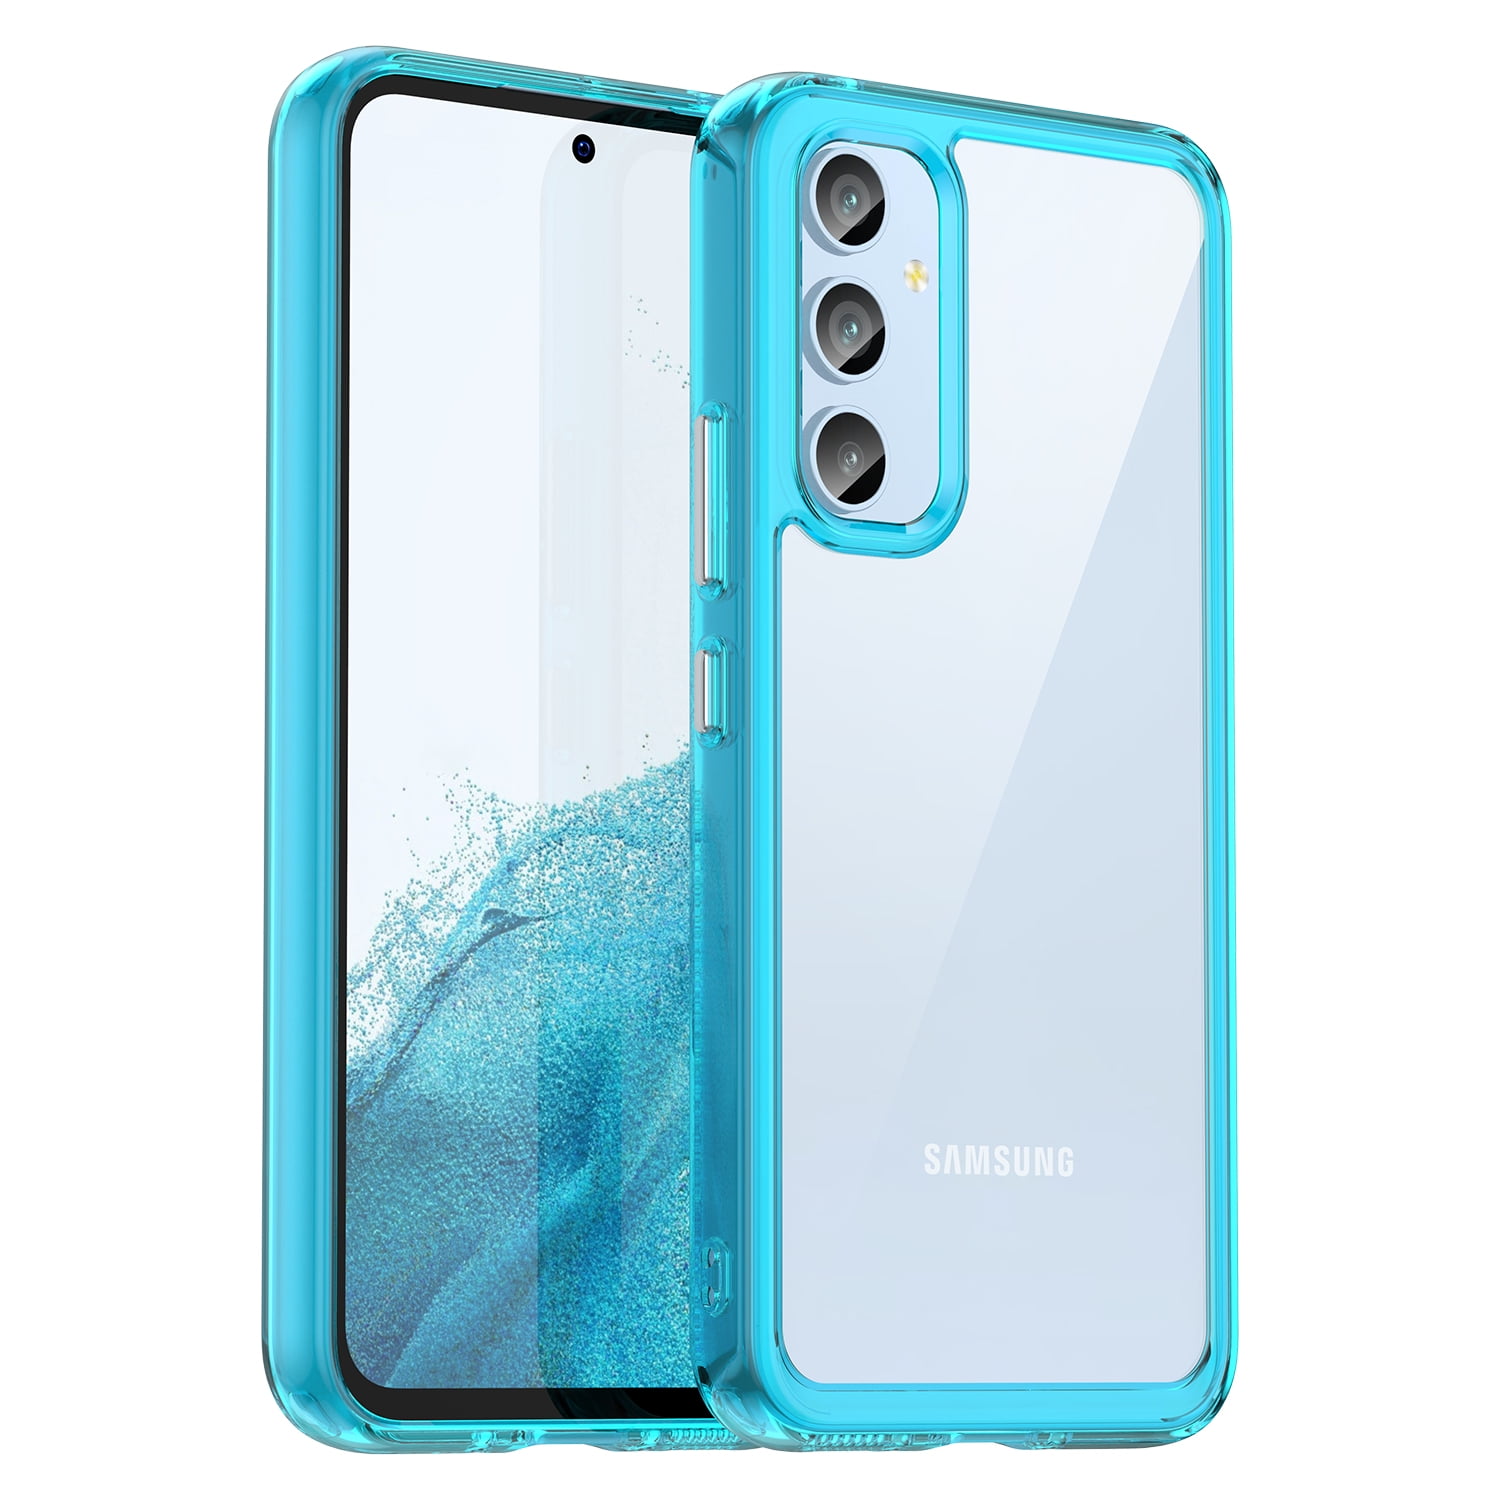 YZ 4 Pack Verre Trempé Pour Samsung Galaxy A40 (5.9) + Coque, Verre Glass  Film - Transparent Silicone Cover TPU Shell